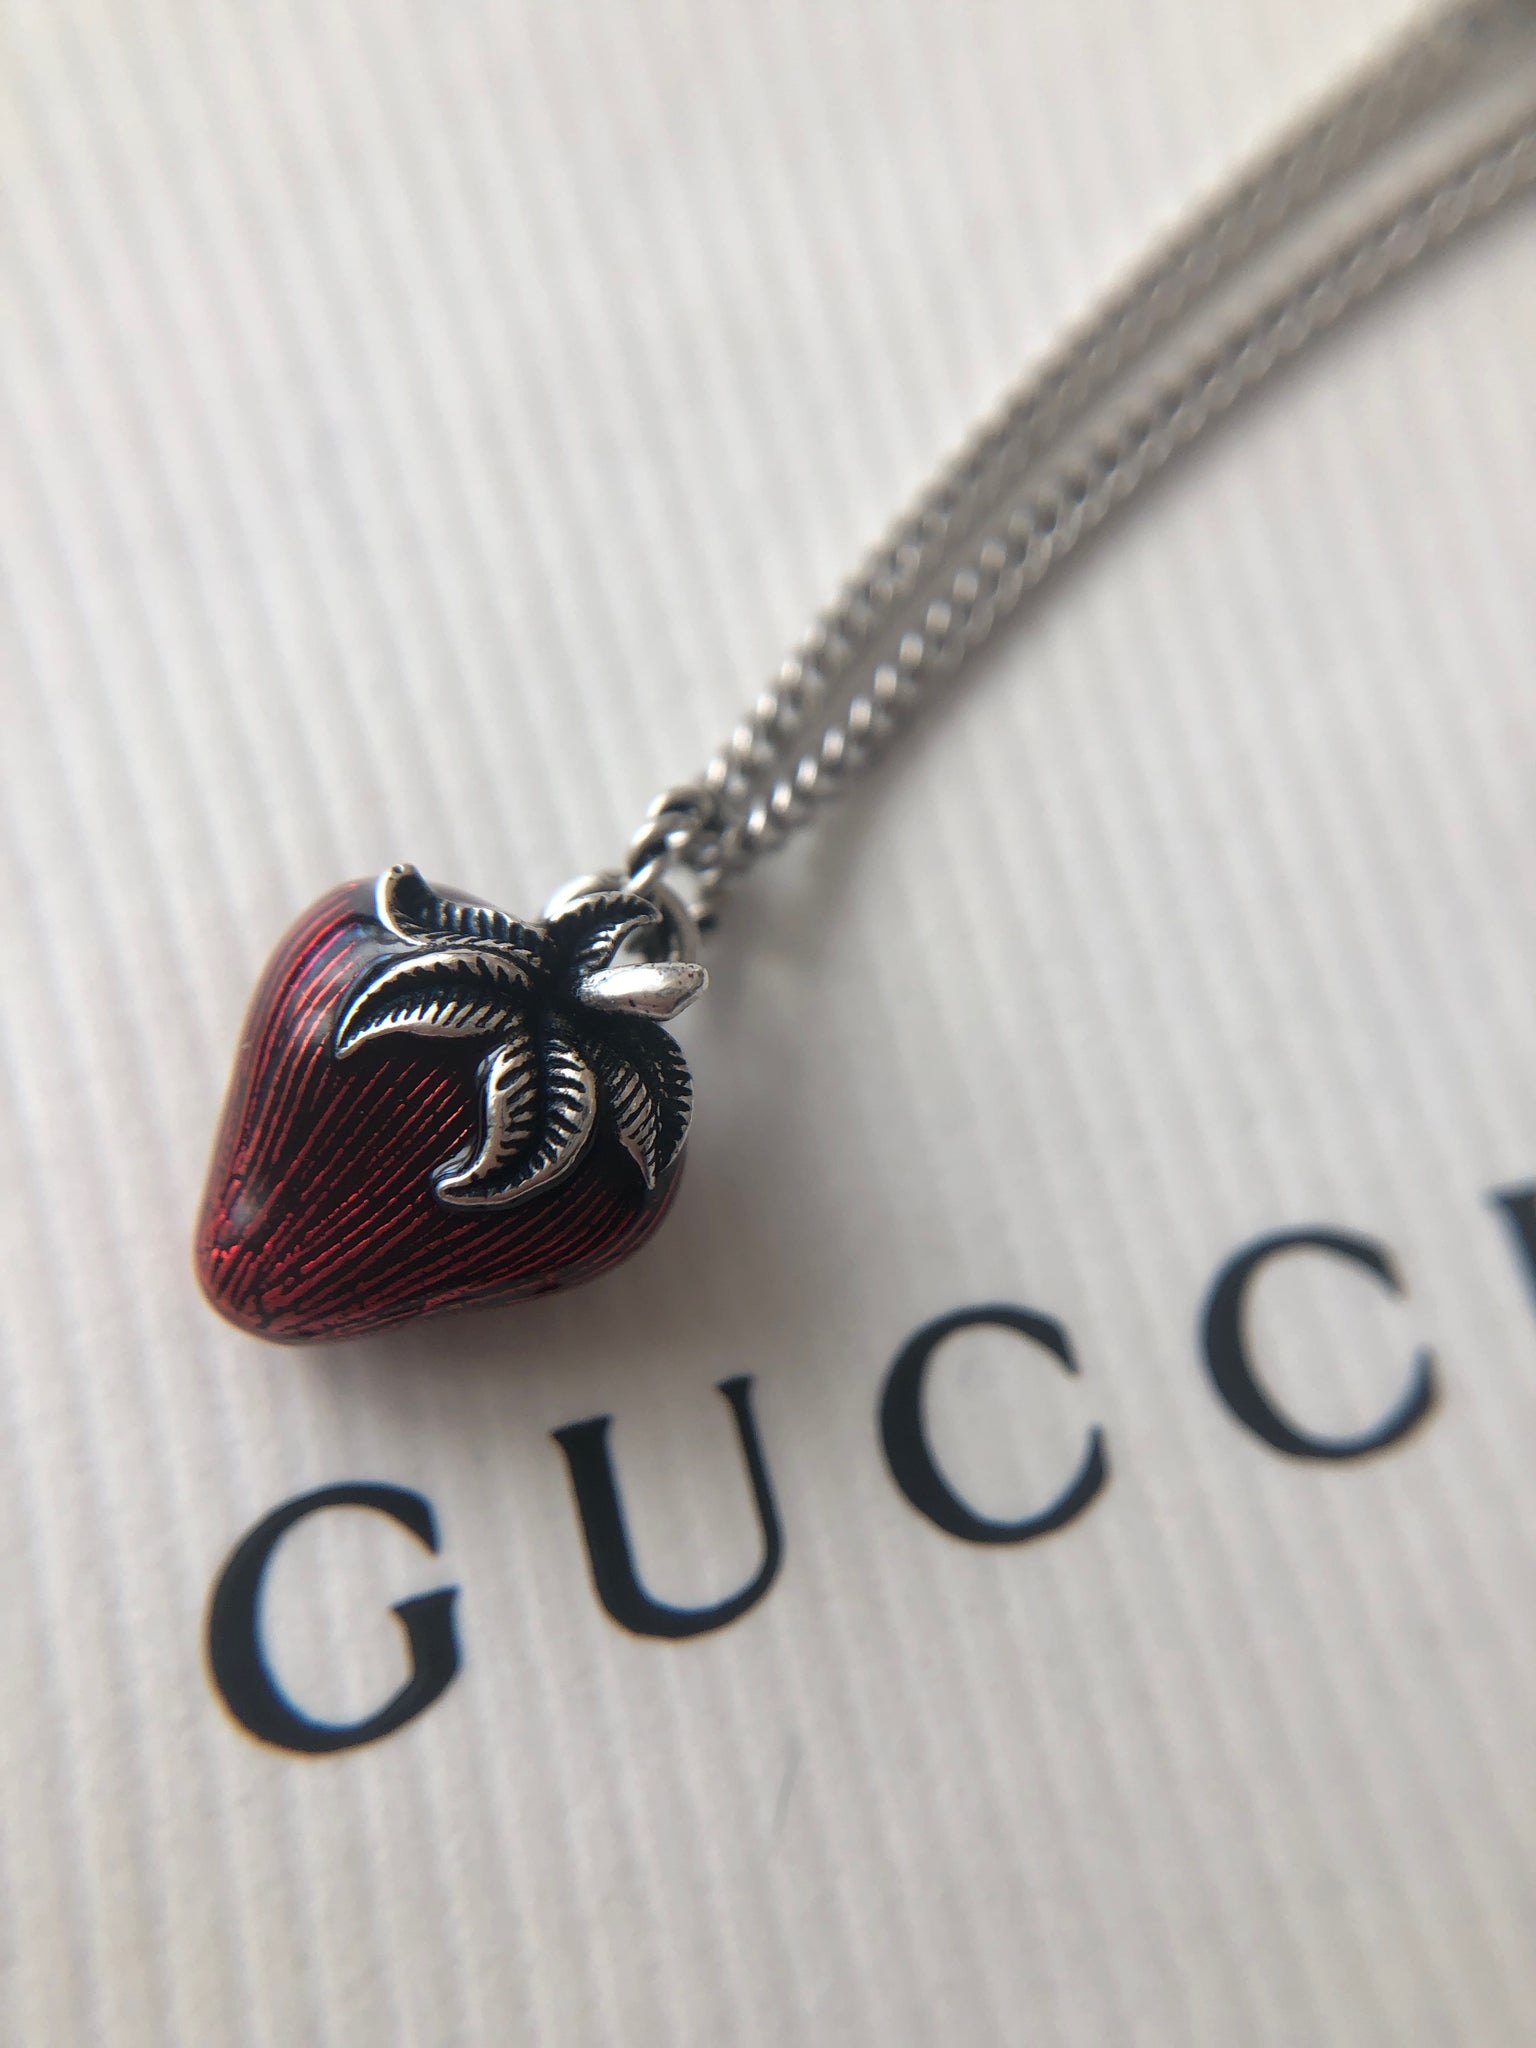 Gucci Interlocking G necklace with strawberry